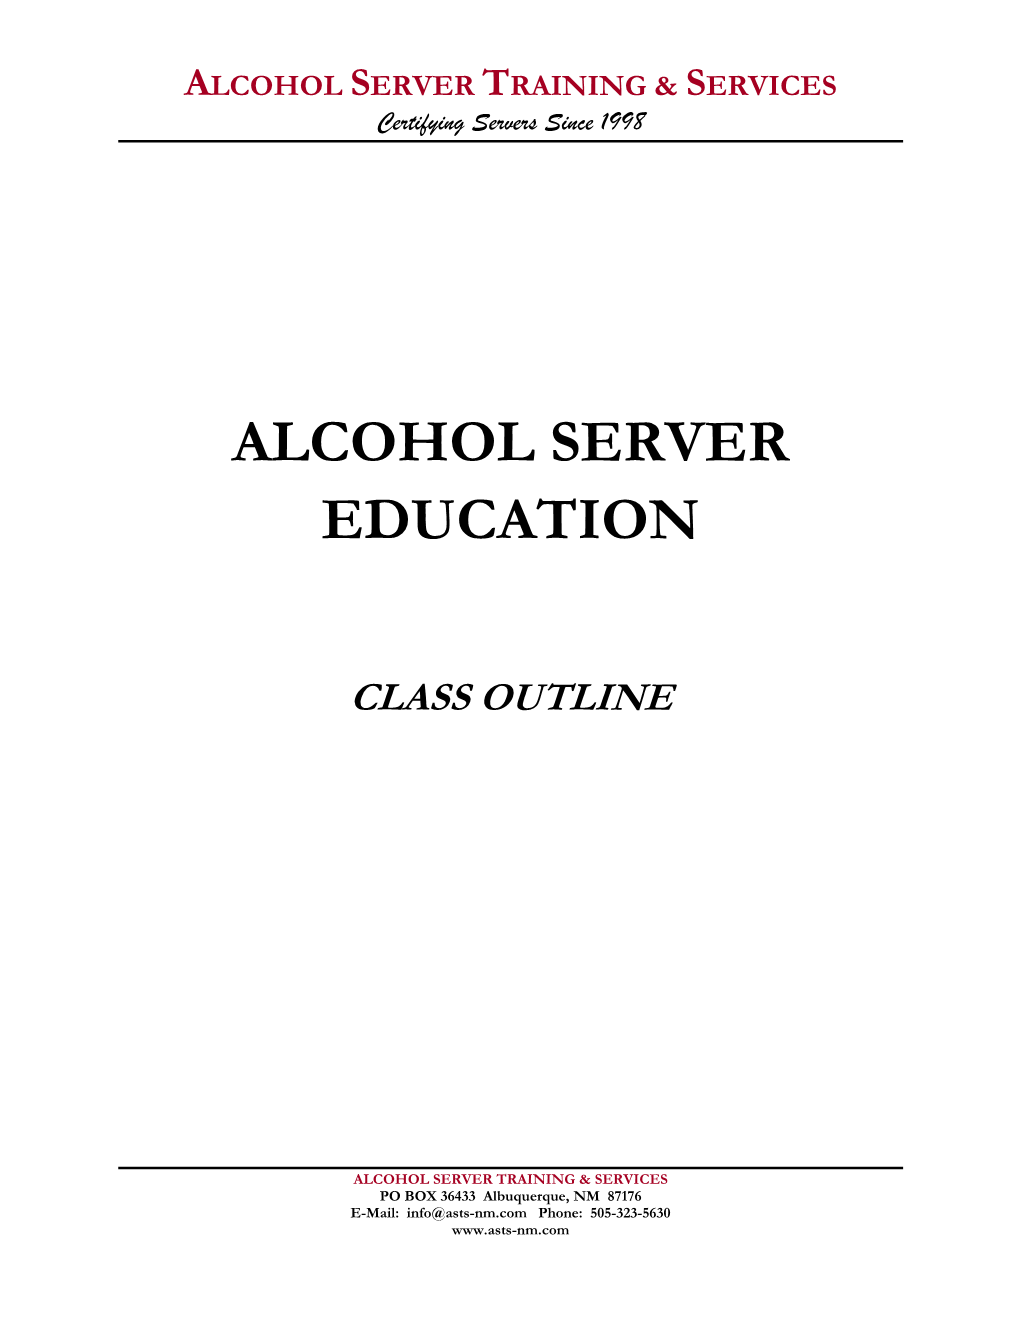 Alcohol Server Education